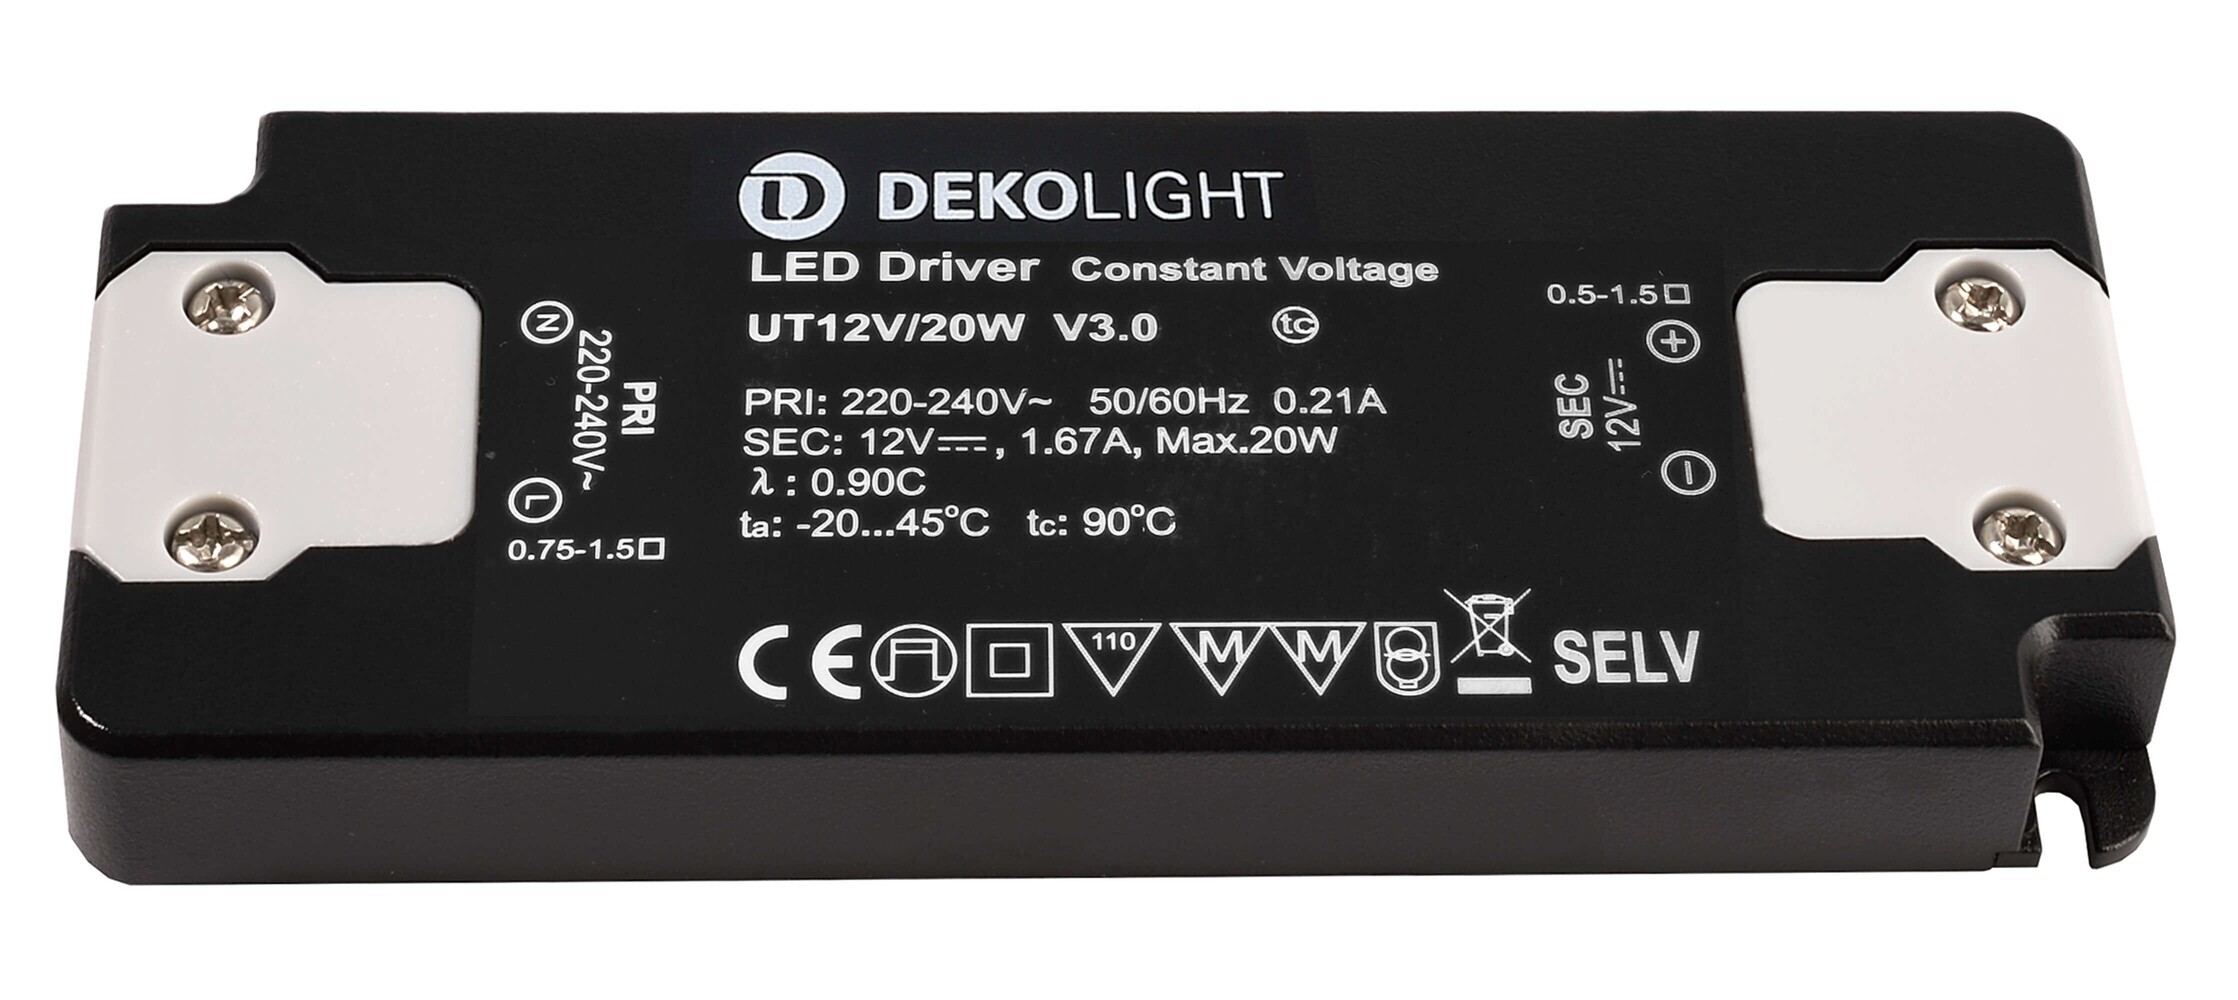 Hochqualitatives, spannungskonstantes LED Netzteil der Marke Deko-Light